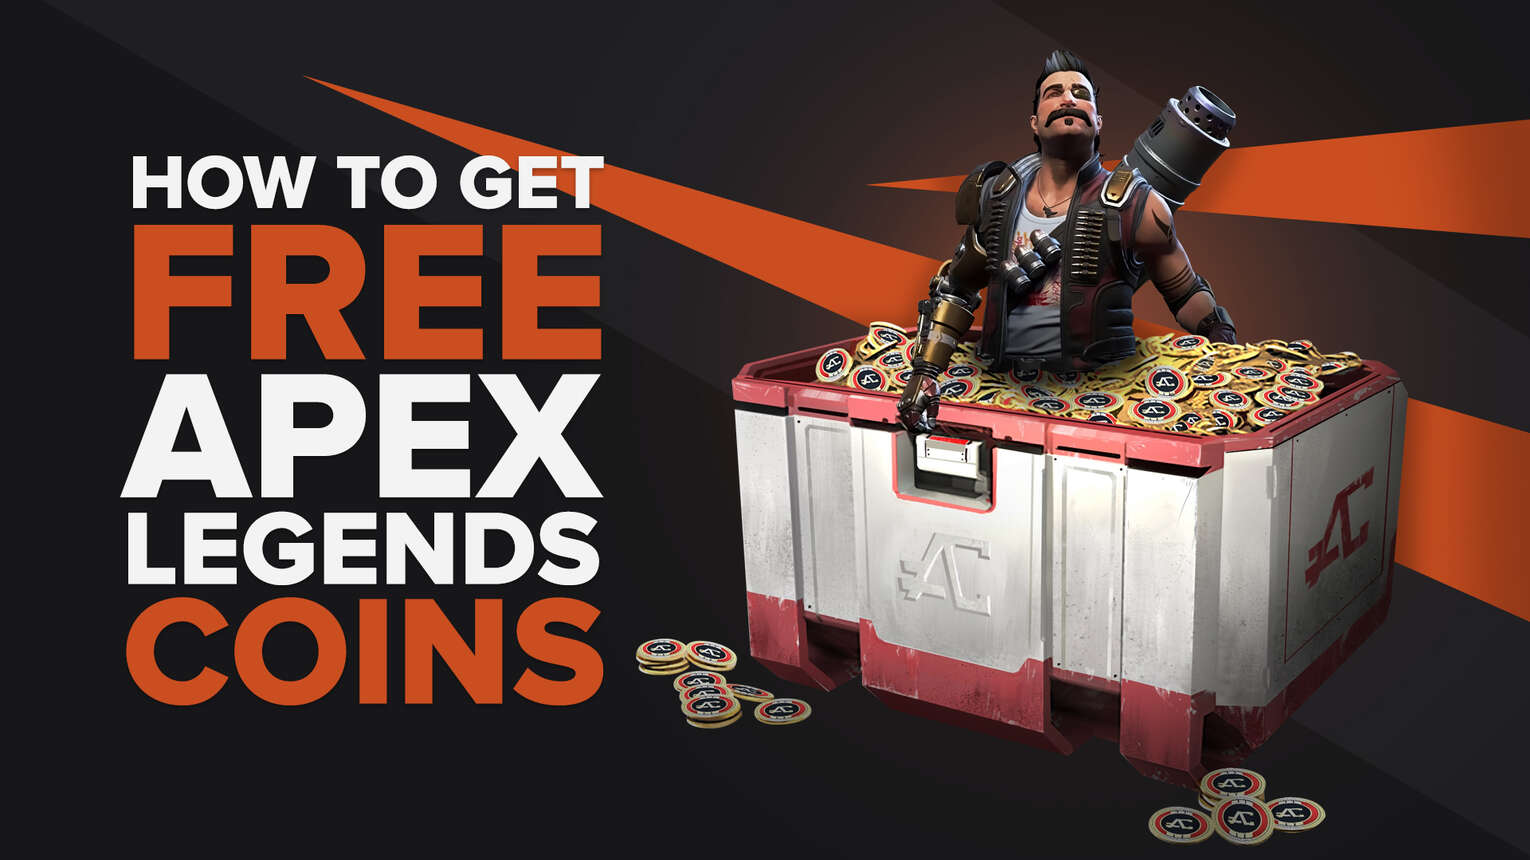 How to Get Free Apex Legends Coins (4 Legit Ways)